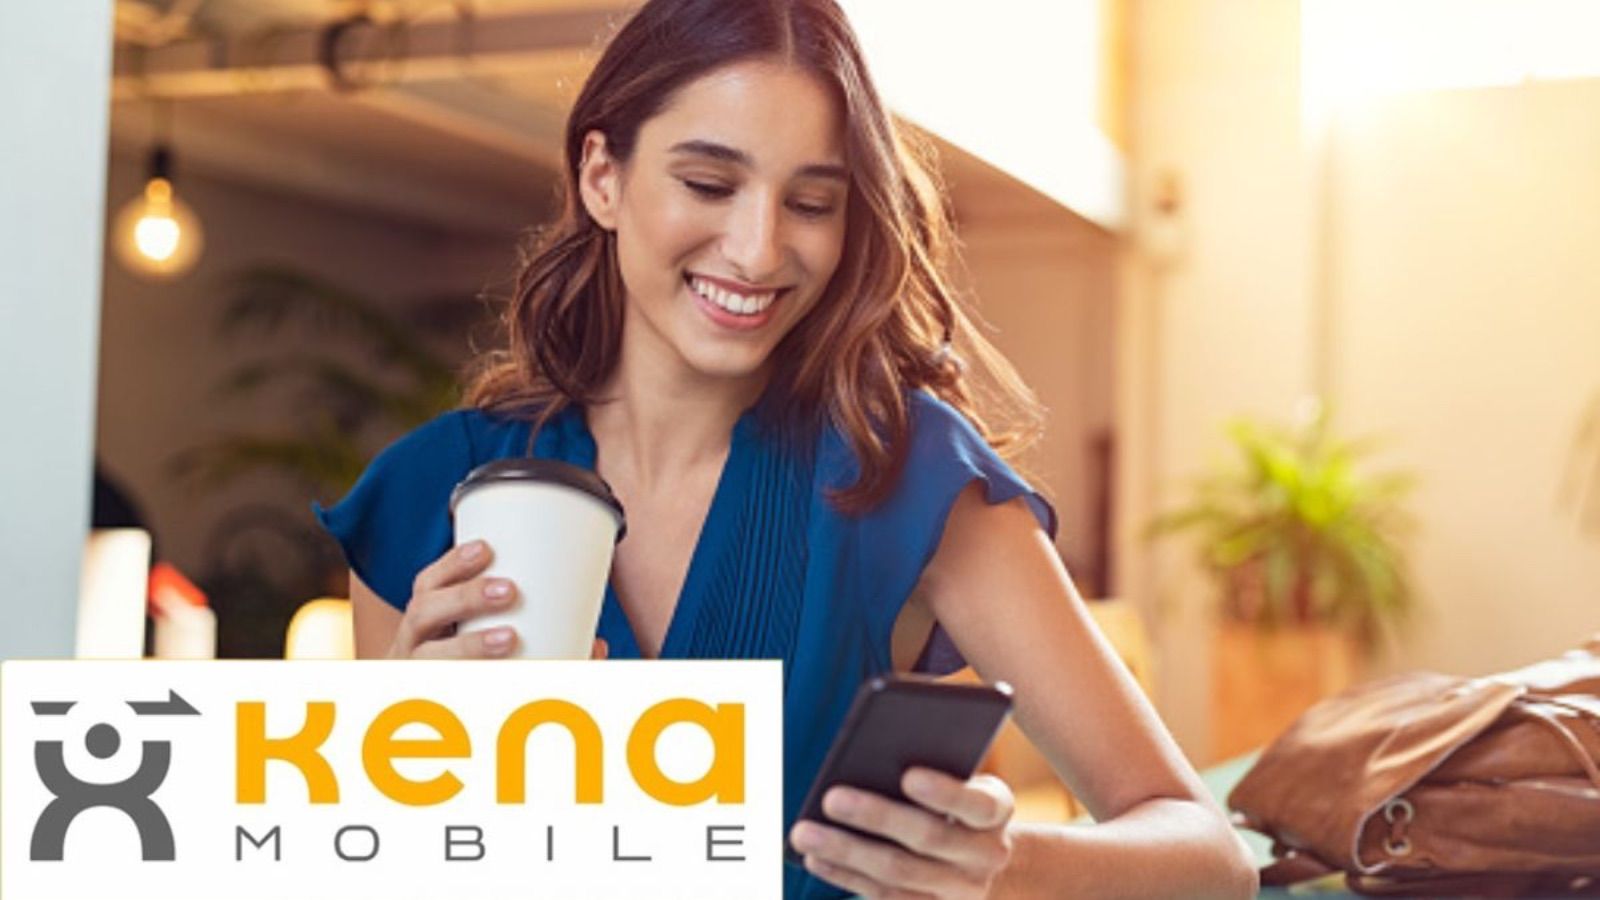 Kena Mobile, è GRATIS la promo da 130 giga al mese